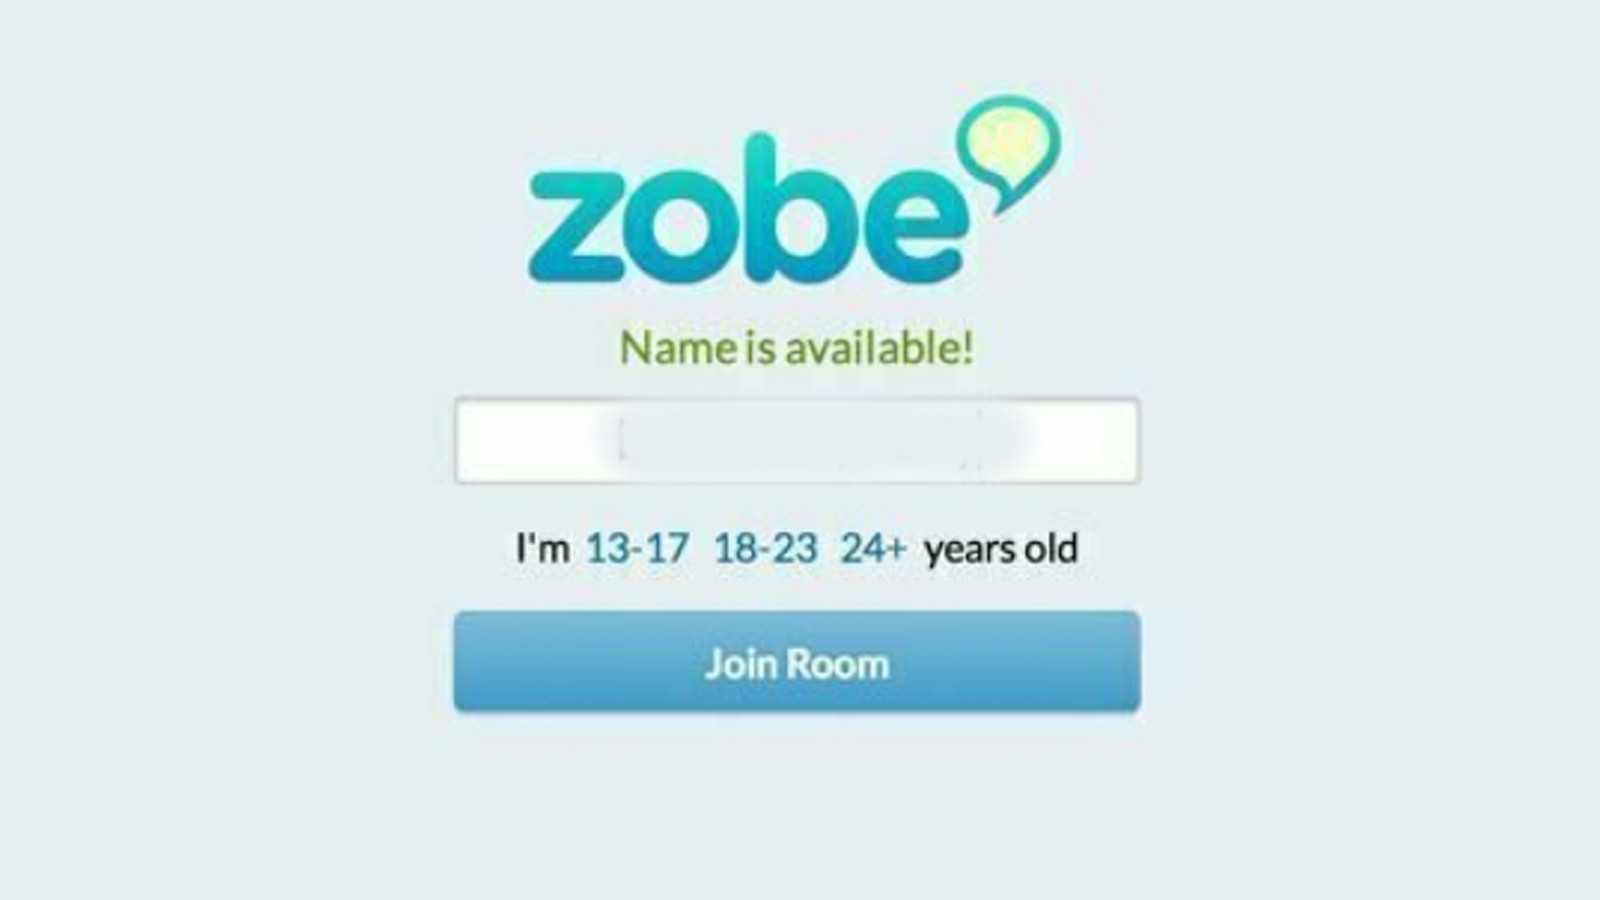 Find detailed information about Zobe